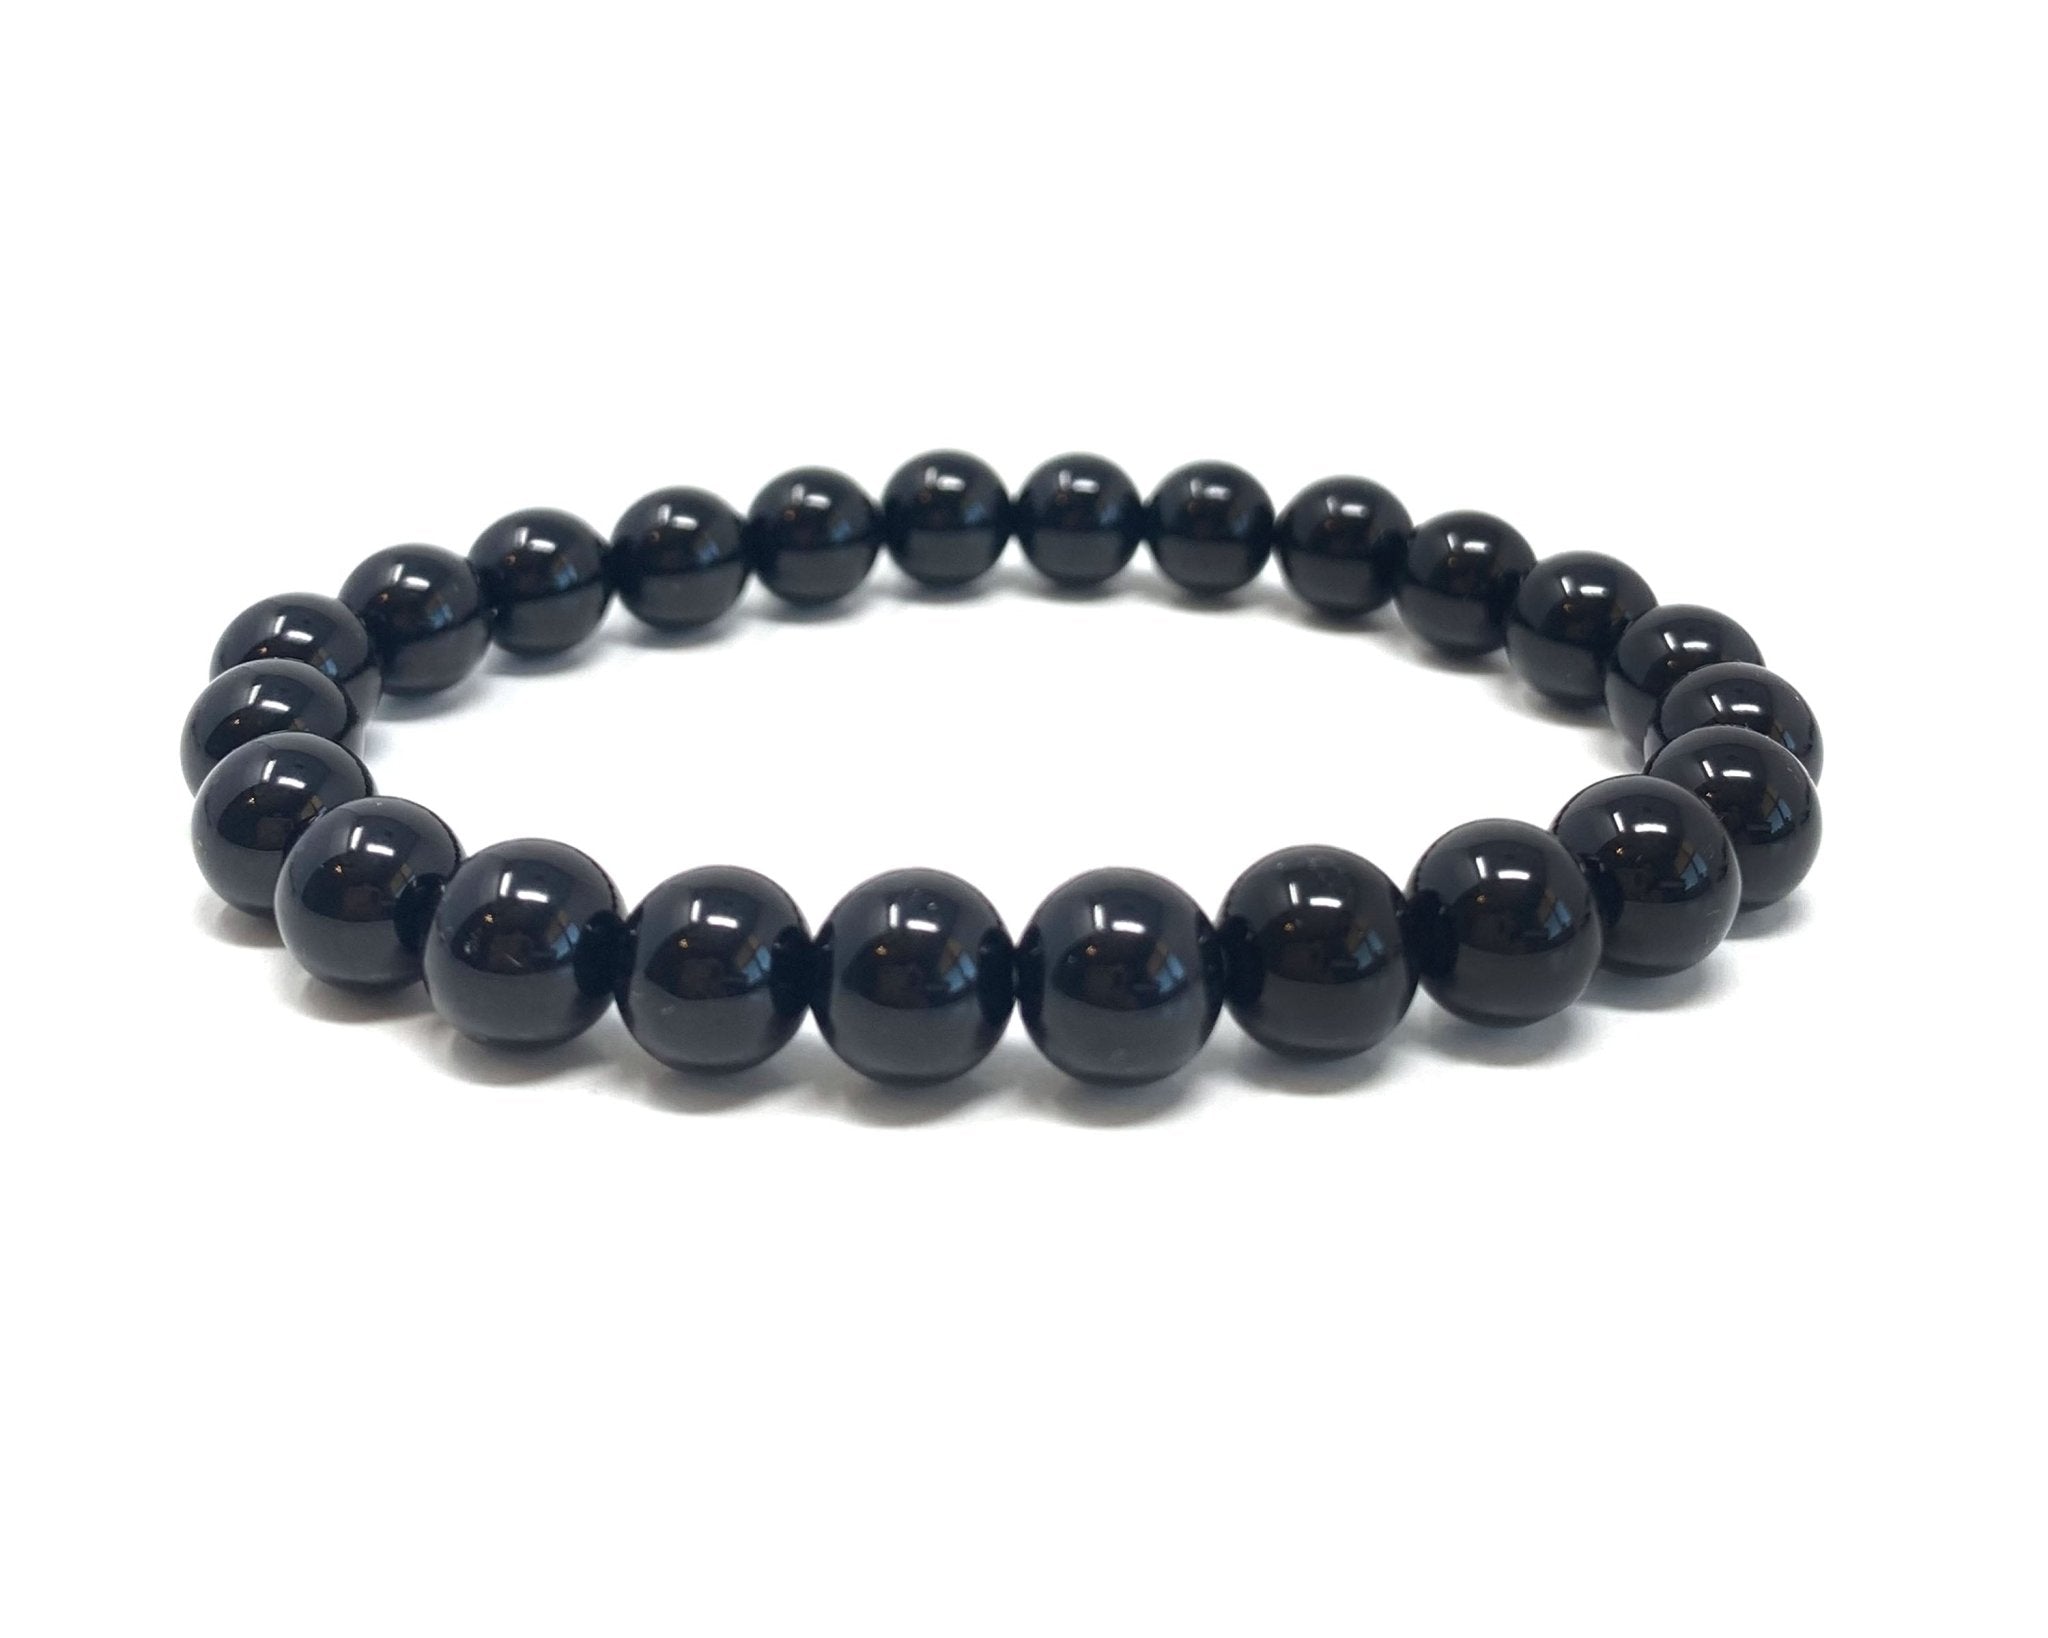 Crystal Beaded Bracelet - Black Obsidian - The Kindness Cause